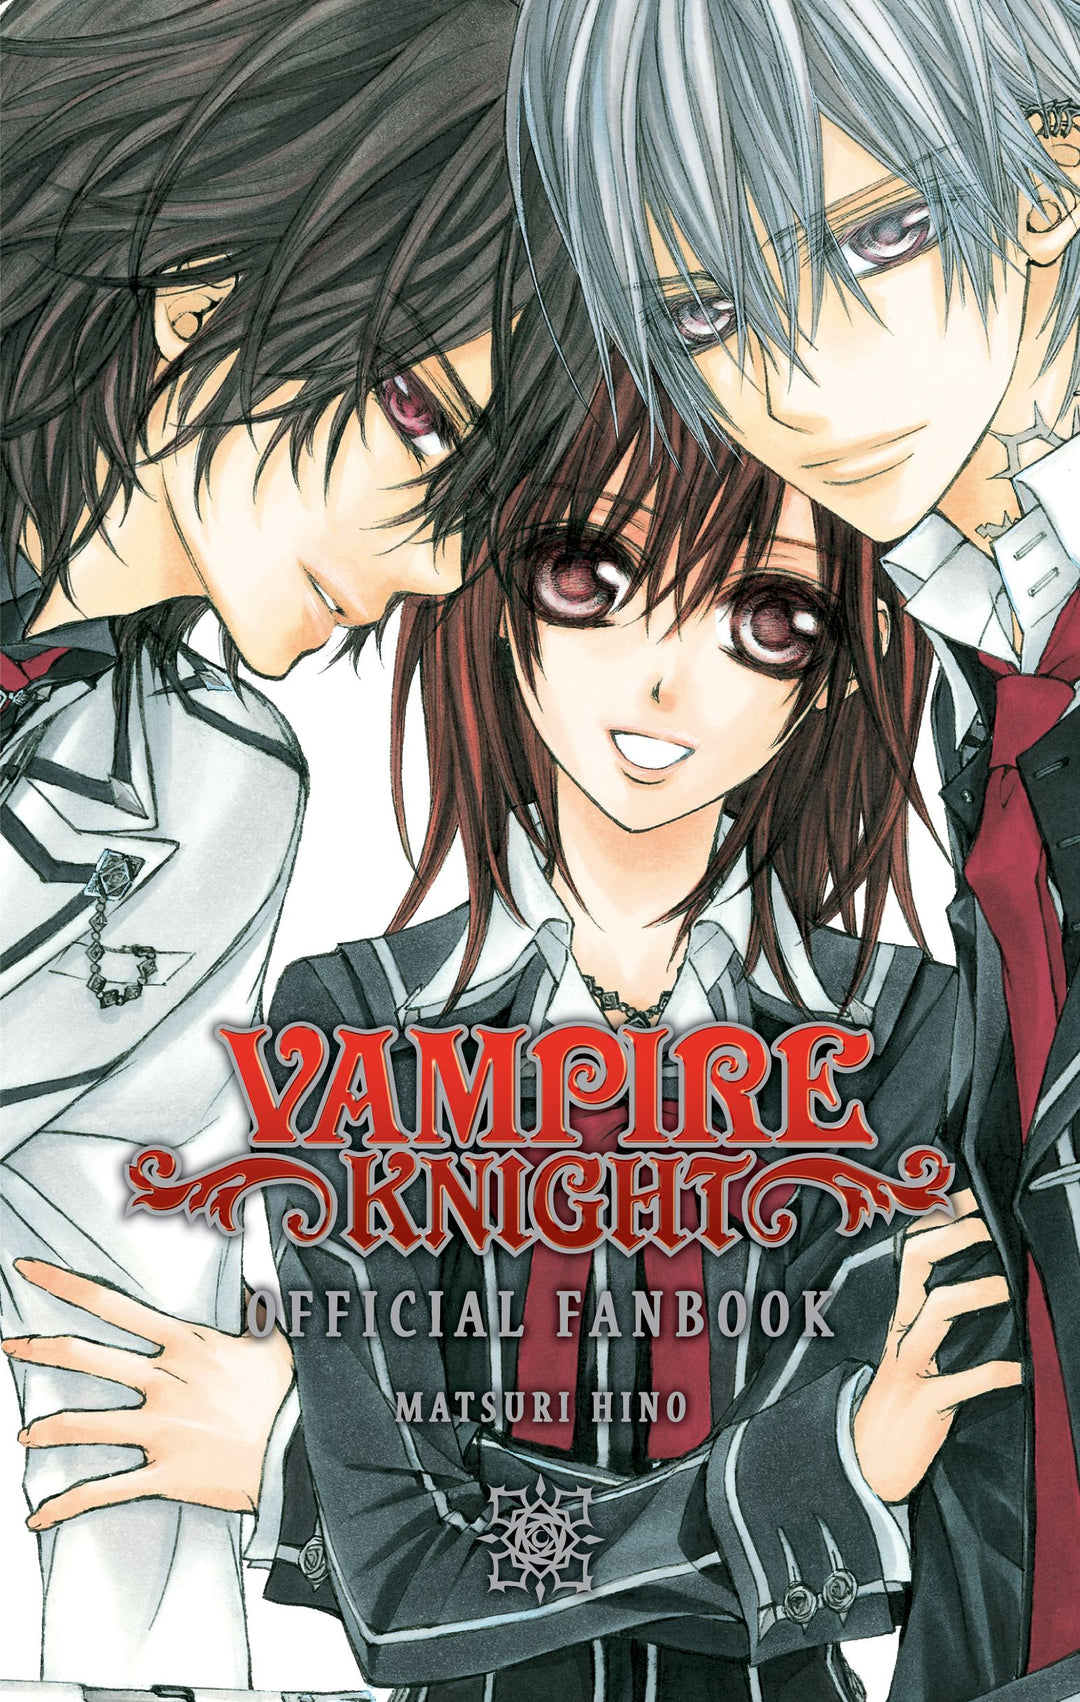 Vampire Knight Official Fanbook - Manga Mate